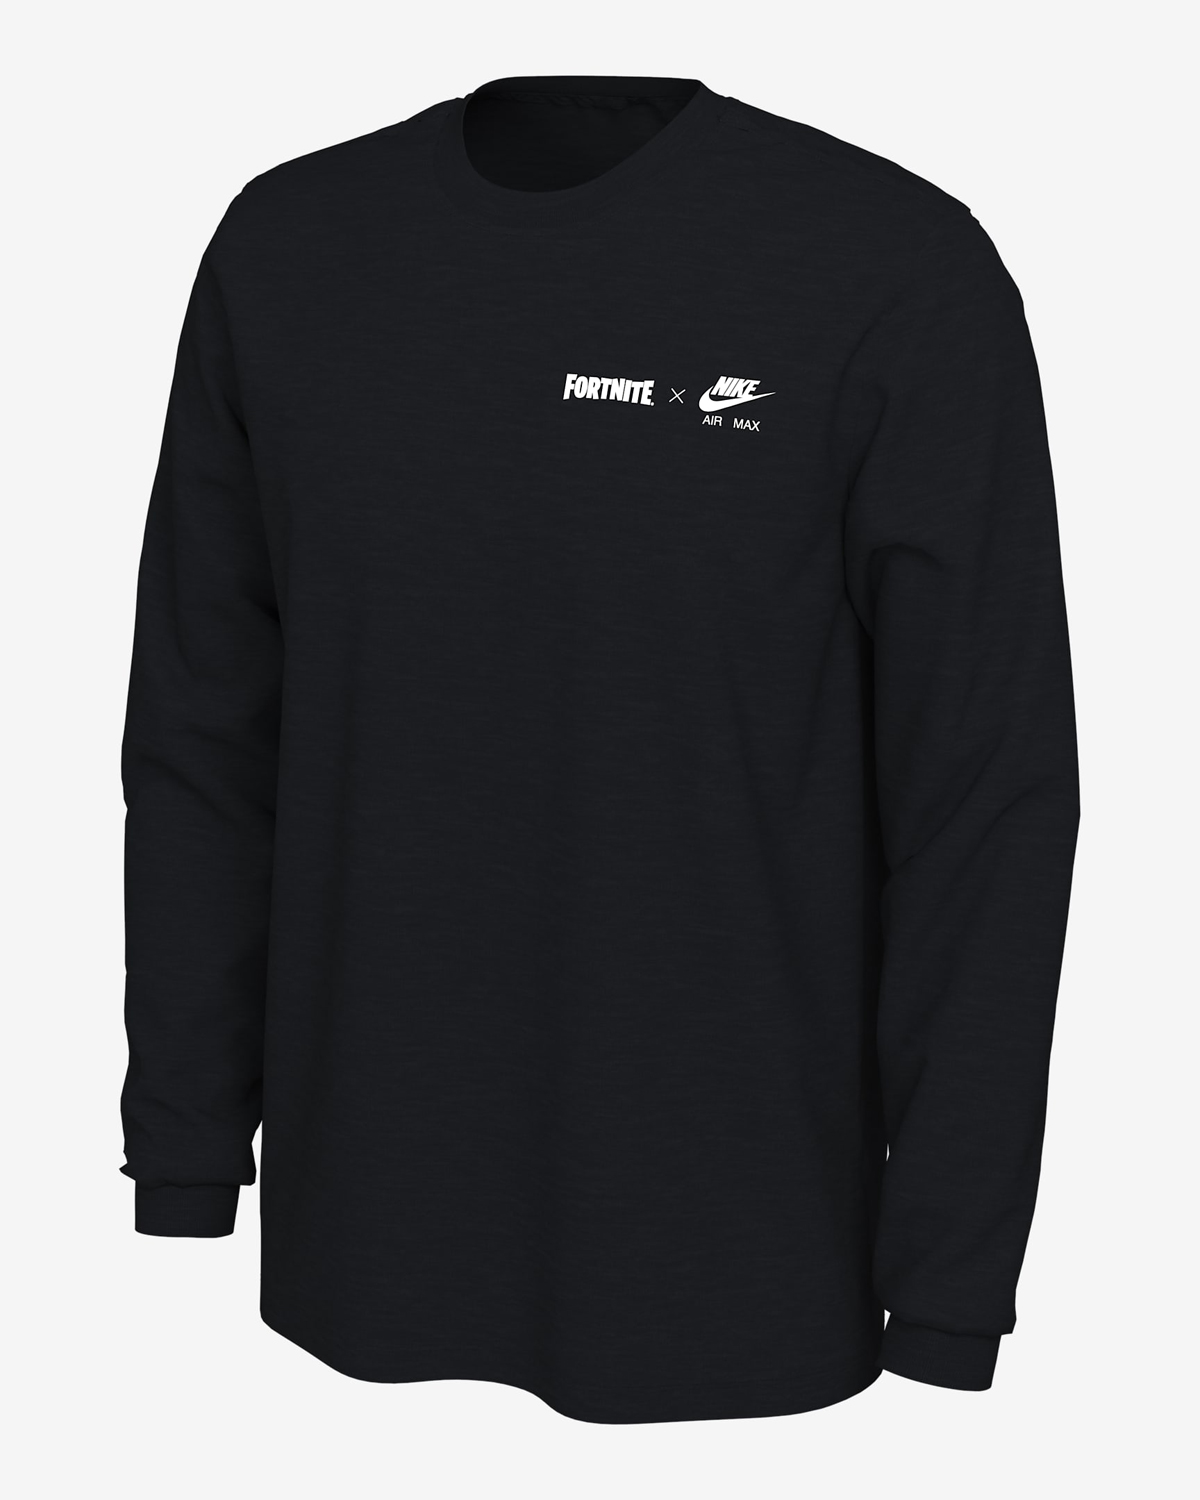 Nike-Fortnite-Air-Max-Long-Sleeve-T-Shirt-Black